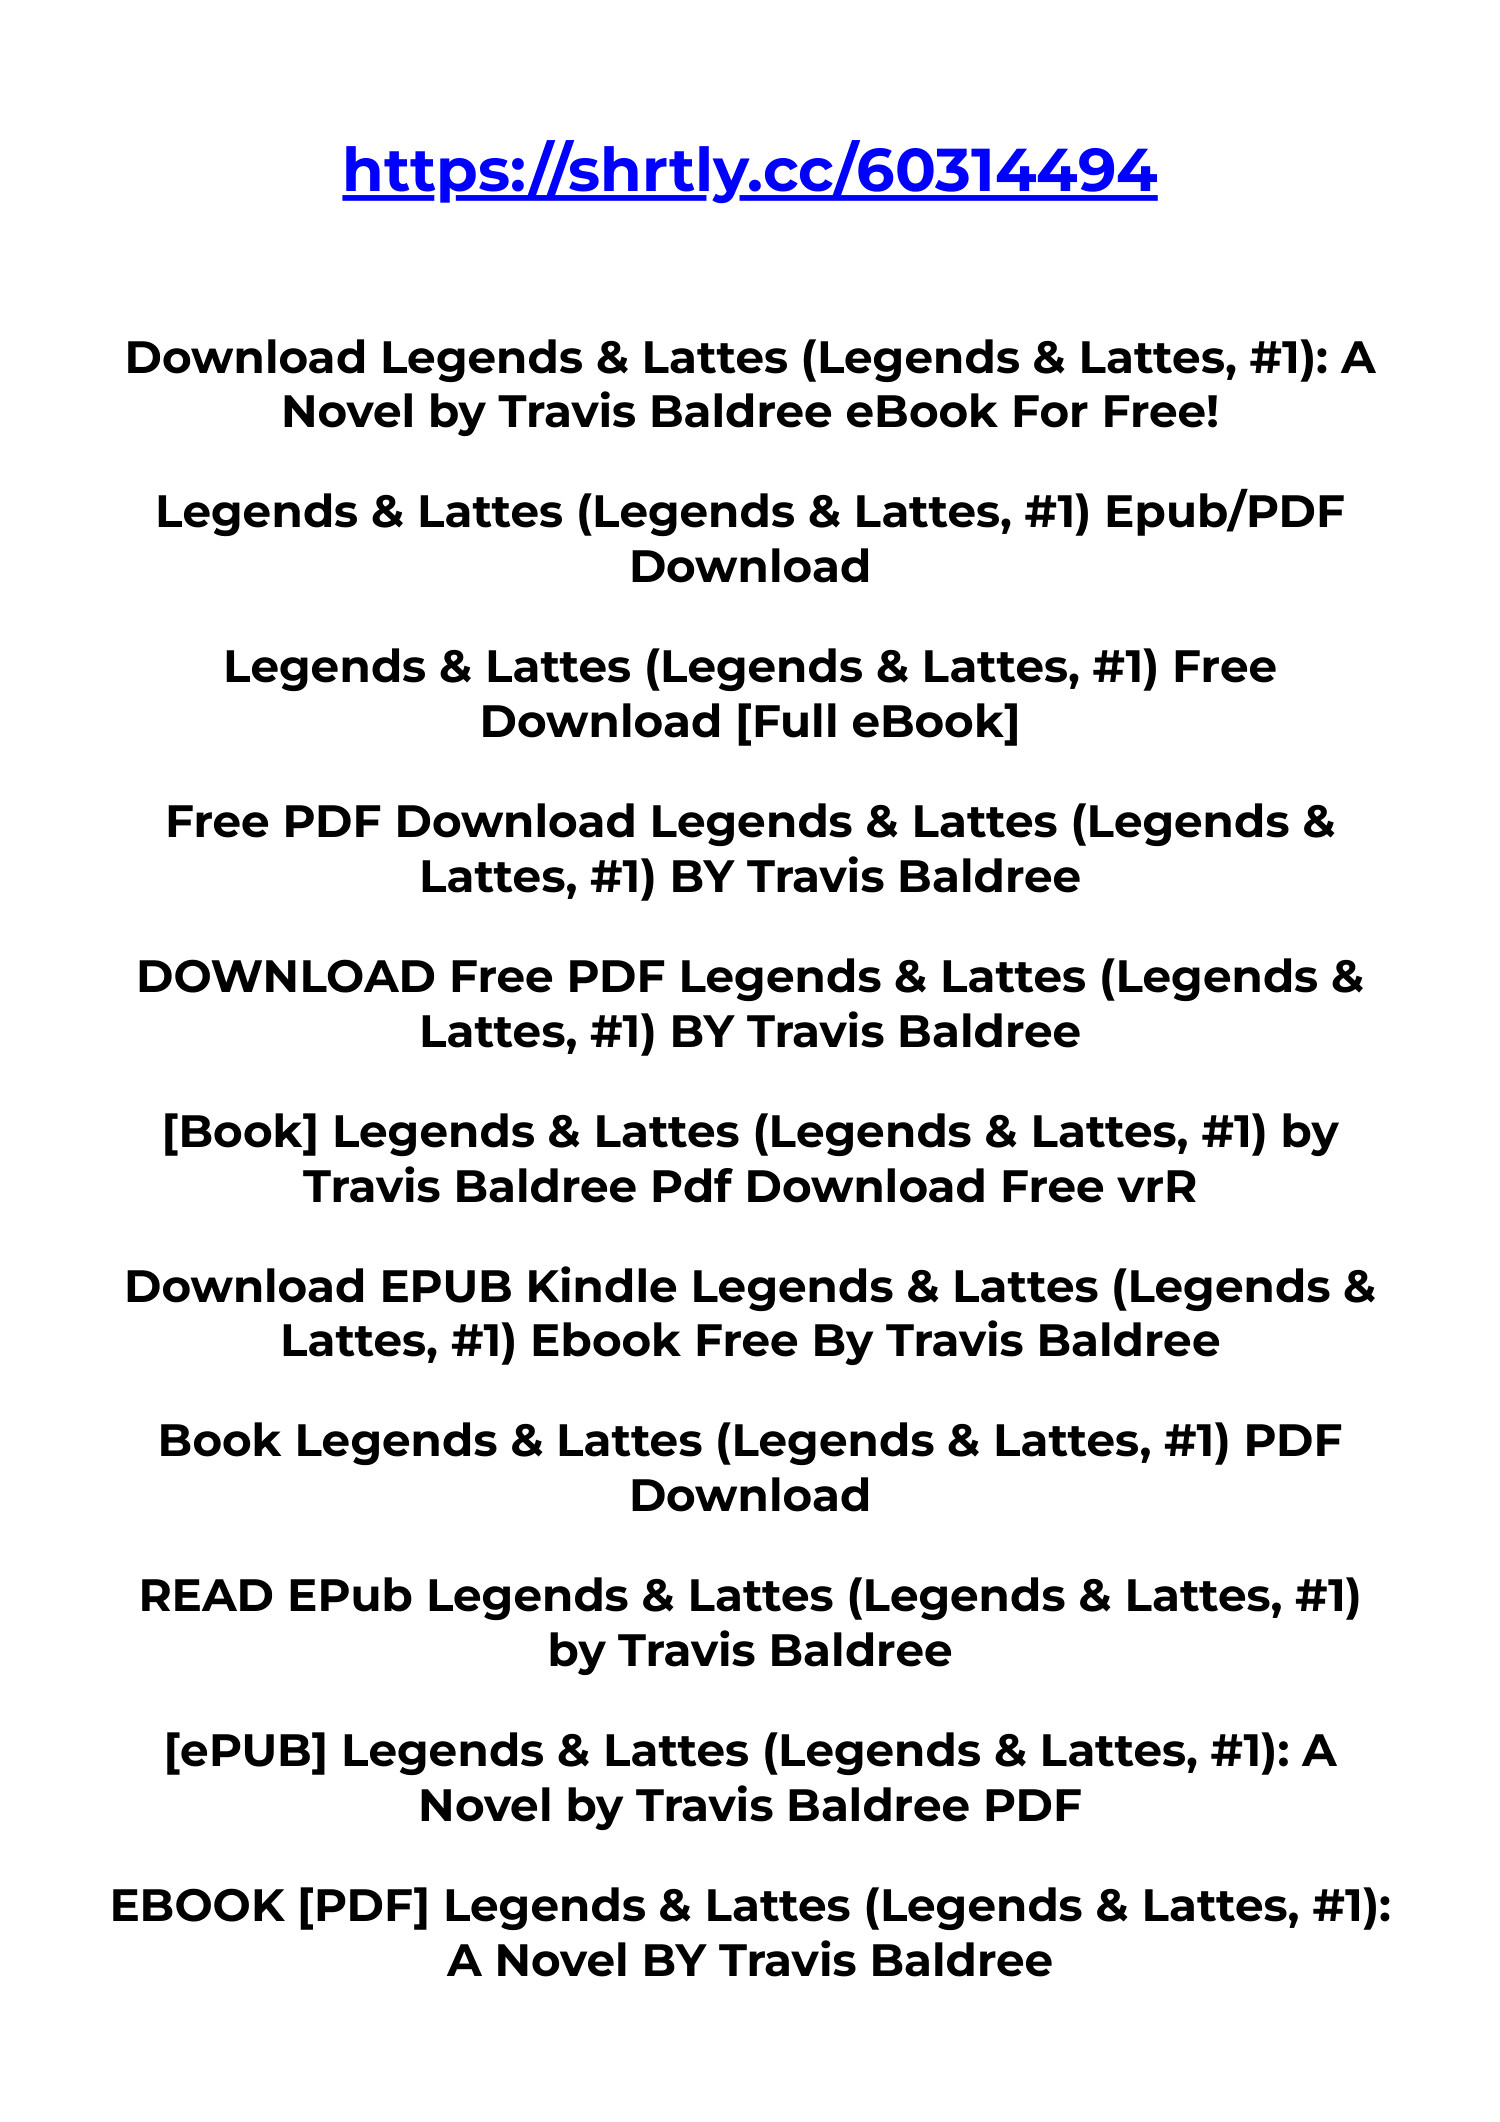 Download PDF Legends & Lattes (Legends & Lattes, #1) Ebook Free By Travis  Baldree.pdf